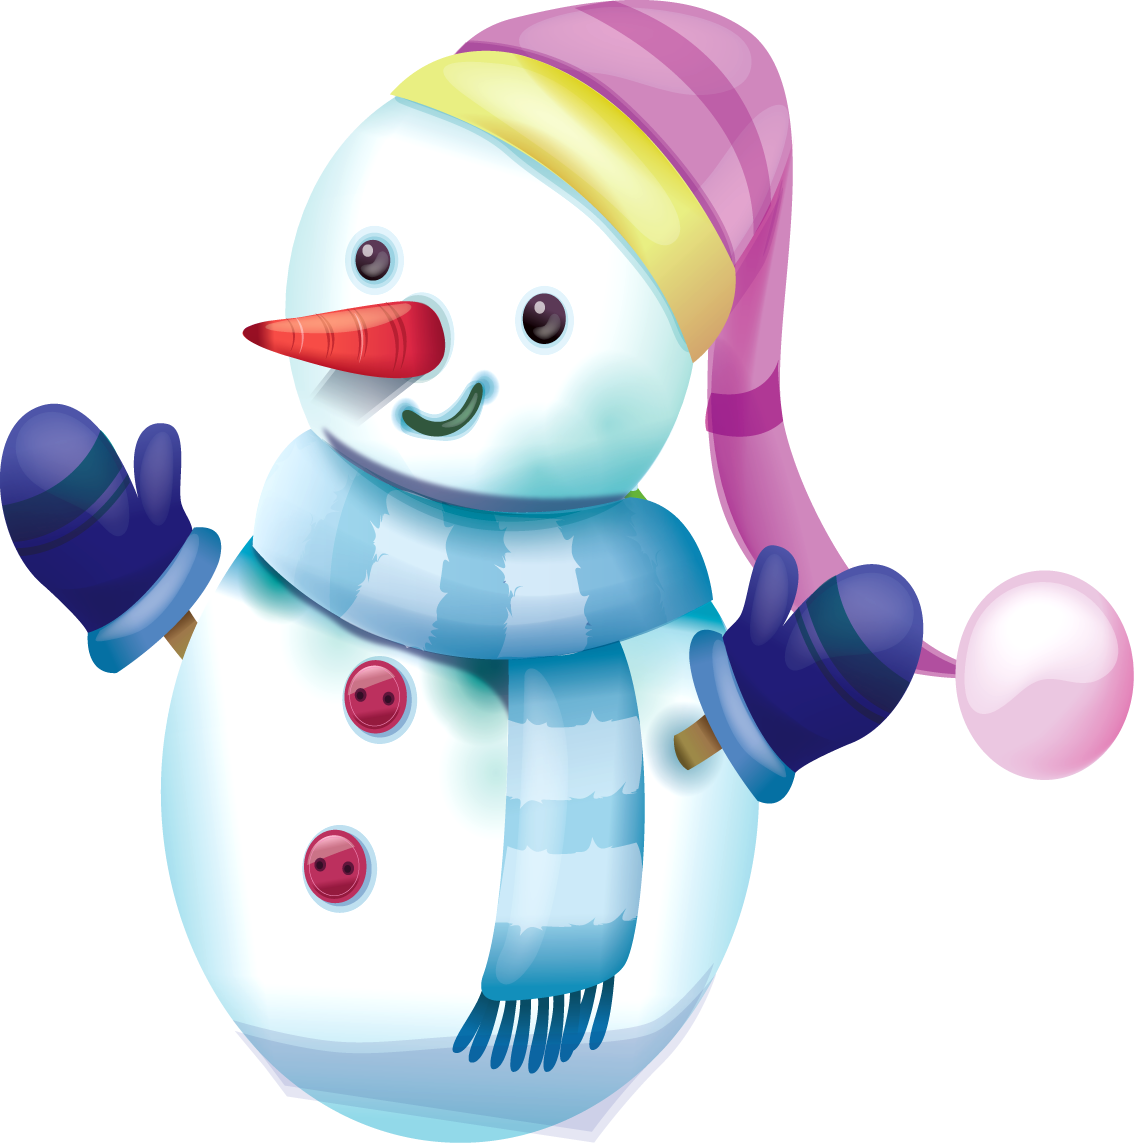 Snowman clipart, winter fun, christmas scrapbook, cute snowman clip art ...